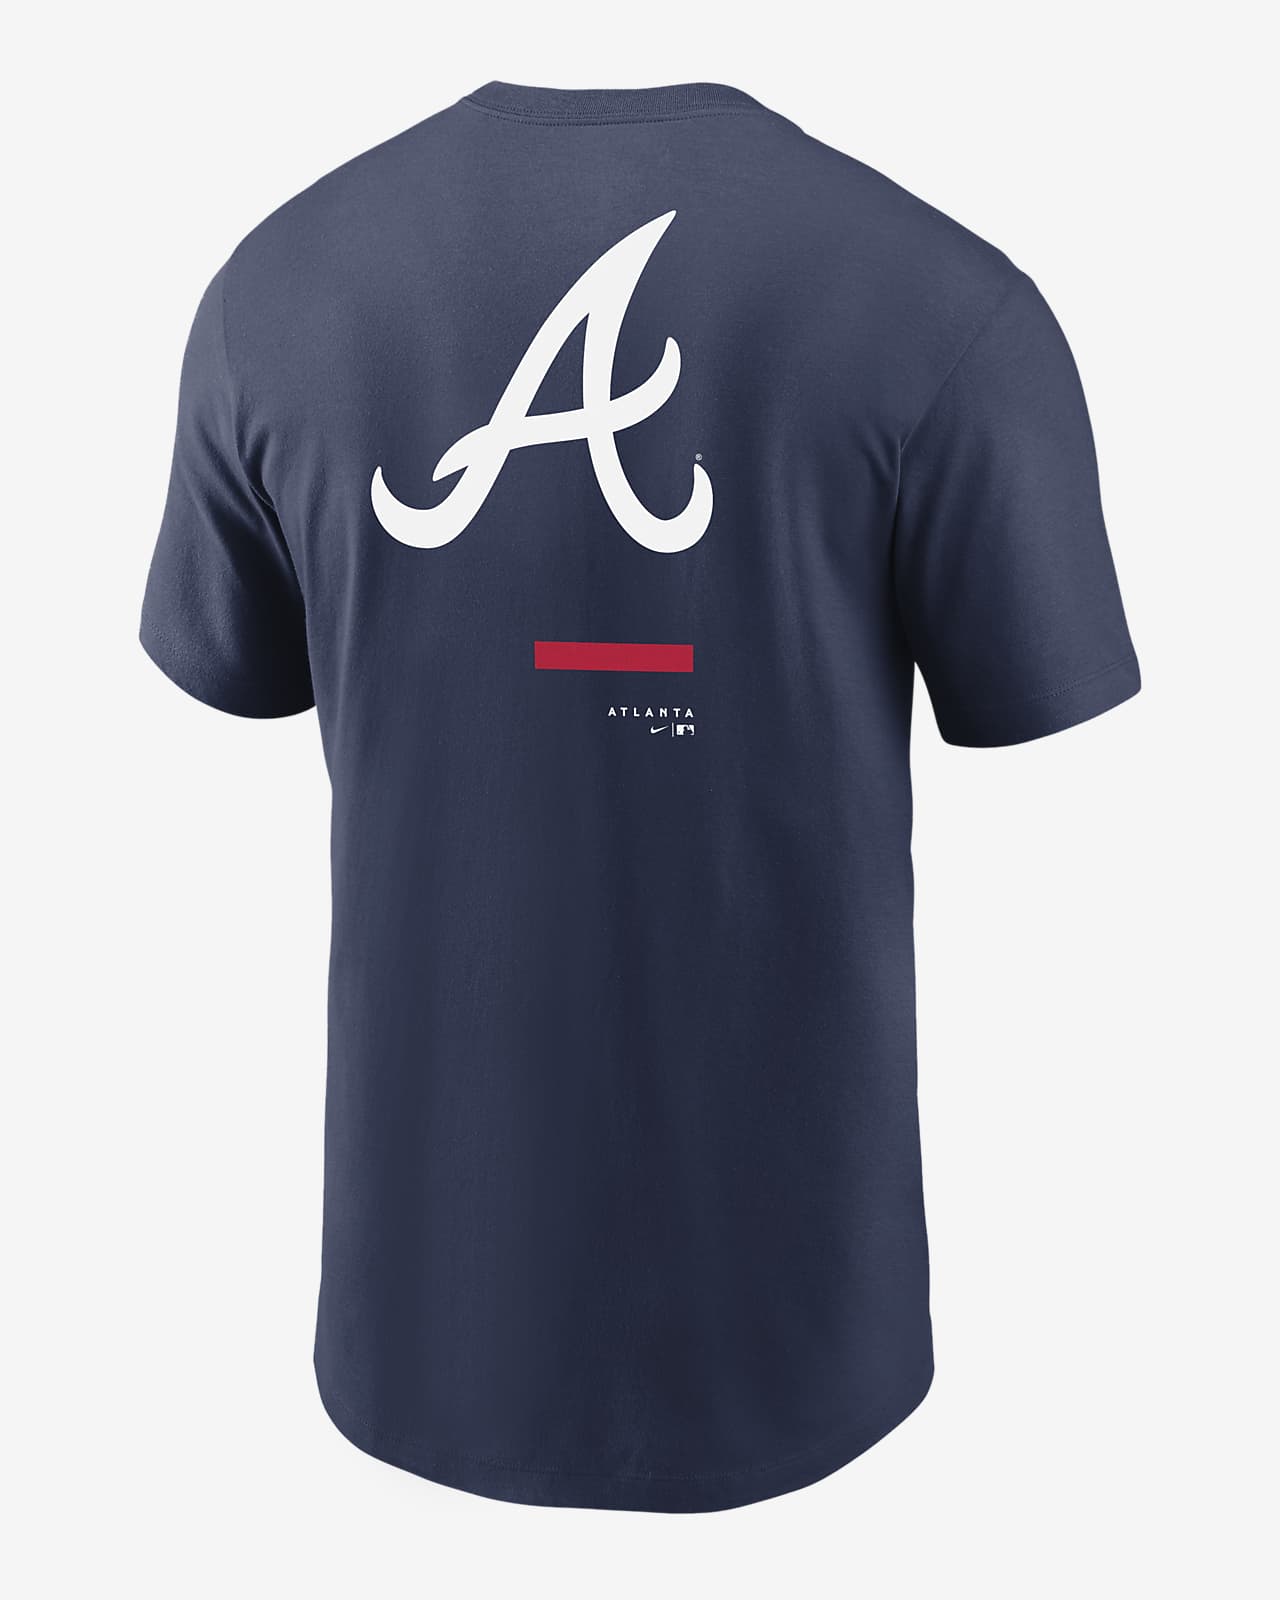 Nike Team Issue (MLB Atlanta Braves) Men's T-Shirt